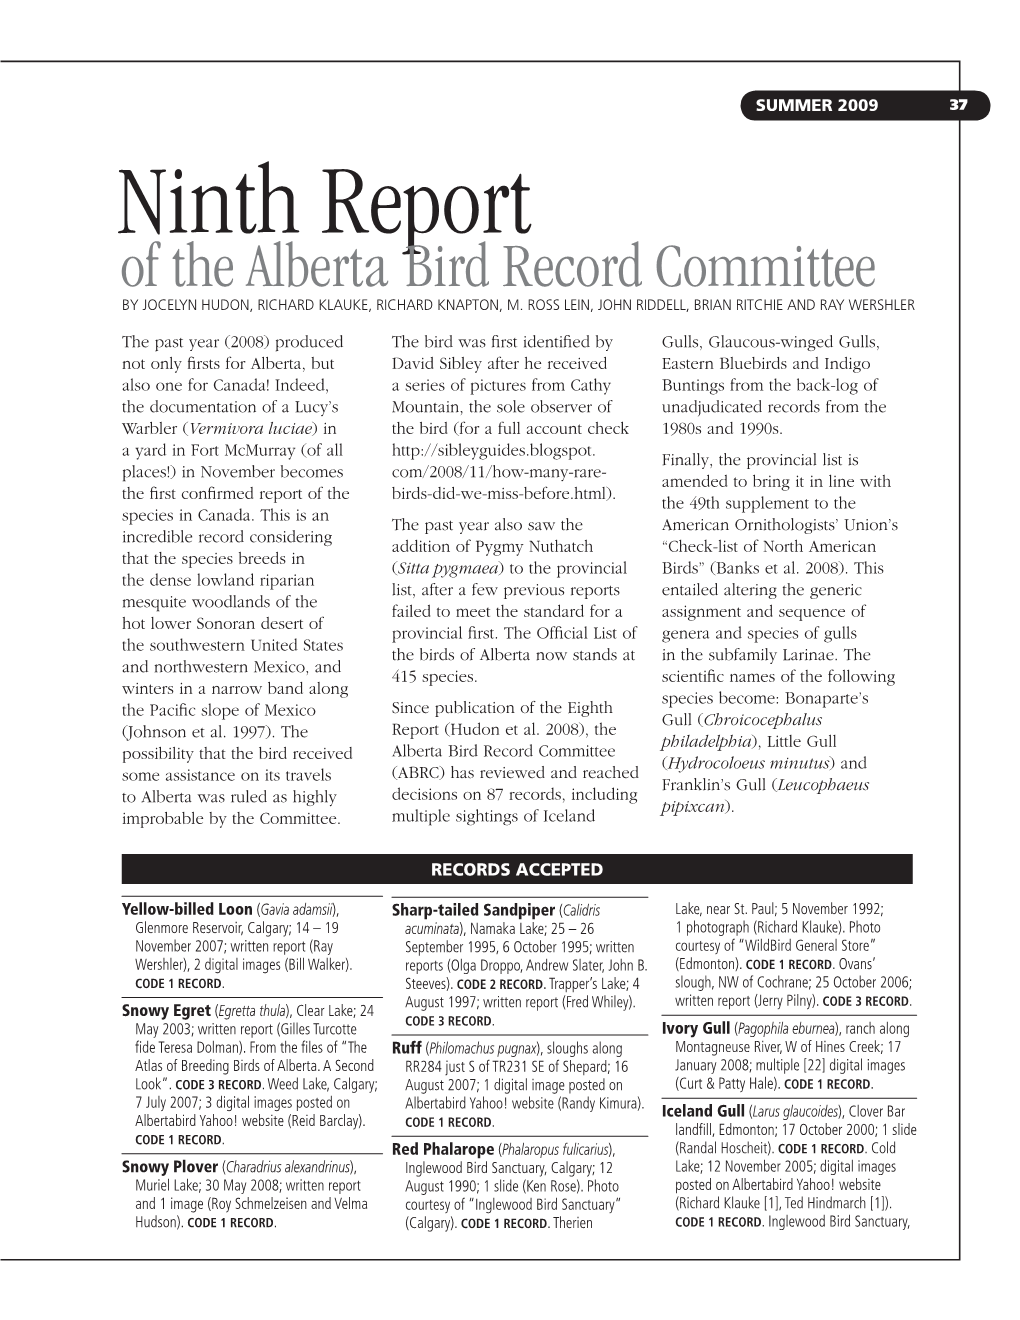 Ninth Report of the Alberta Bird Record Committee by JOCELYN HUDON, RICHARD KLAUKE, RICHARD KNAPTON, M